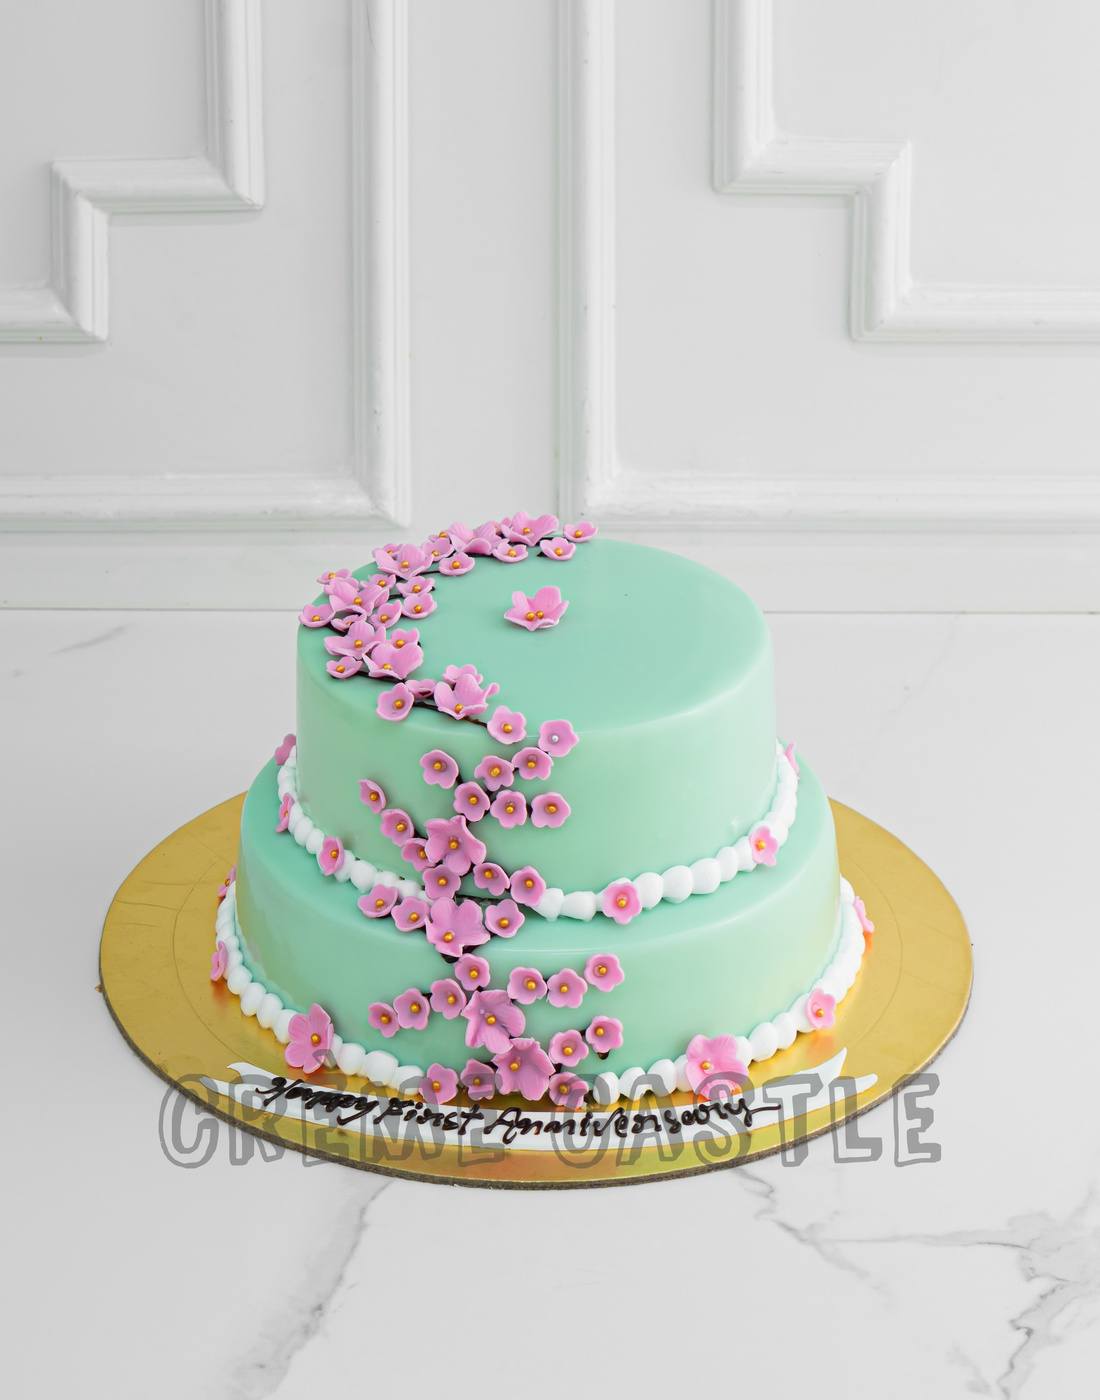 Cherry Blossom Theme Cake Designs & Images